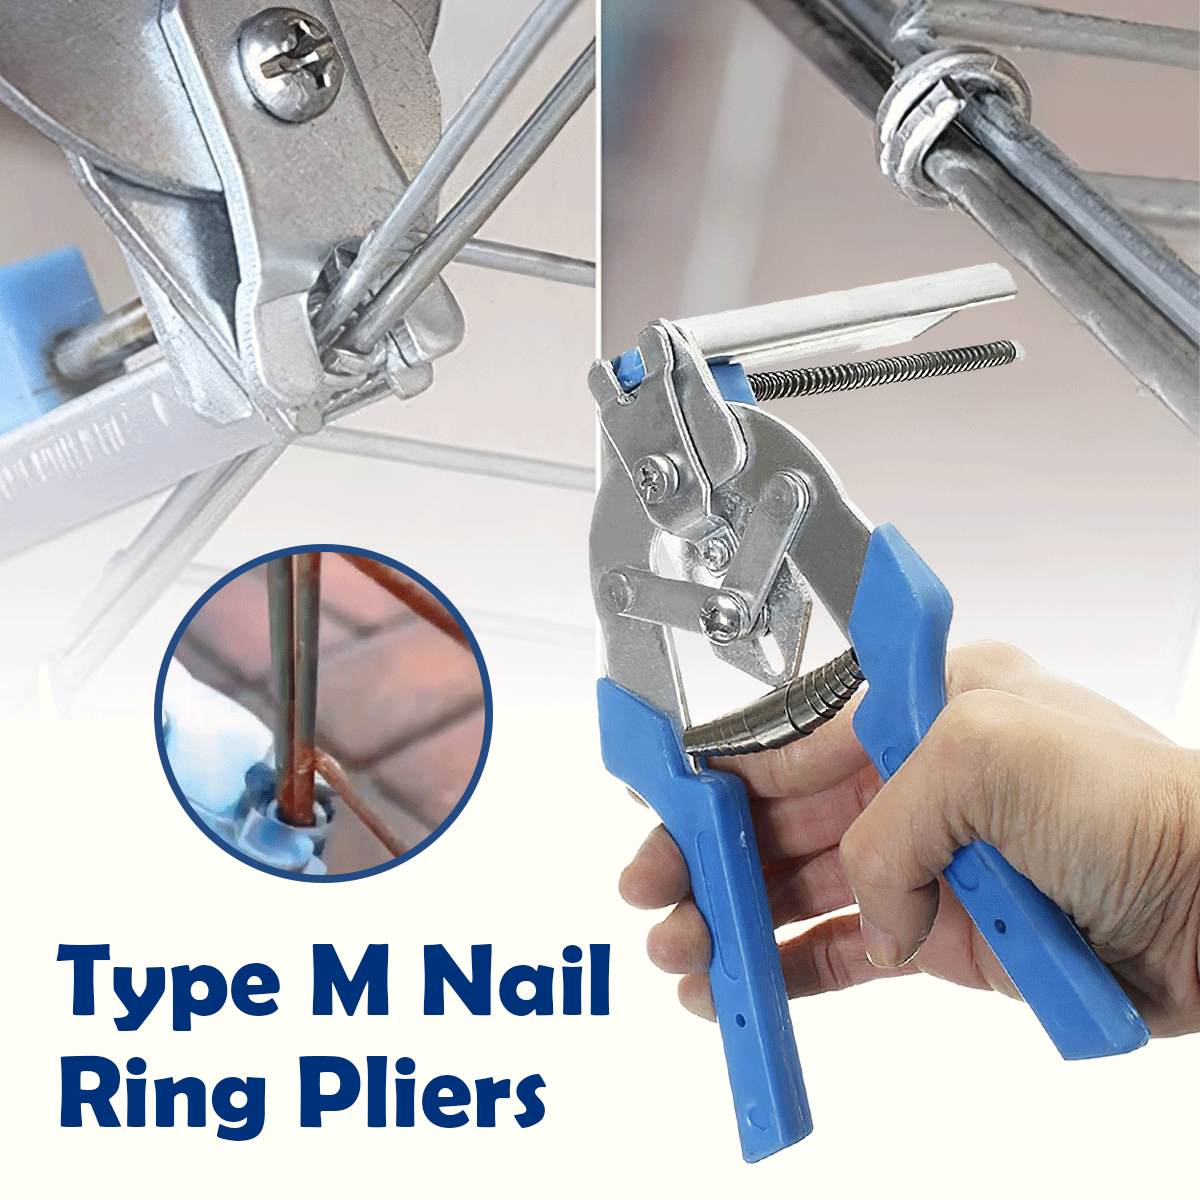 Type M Nail Ring Pliers